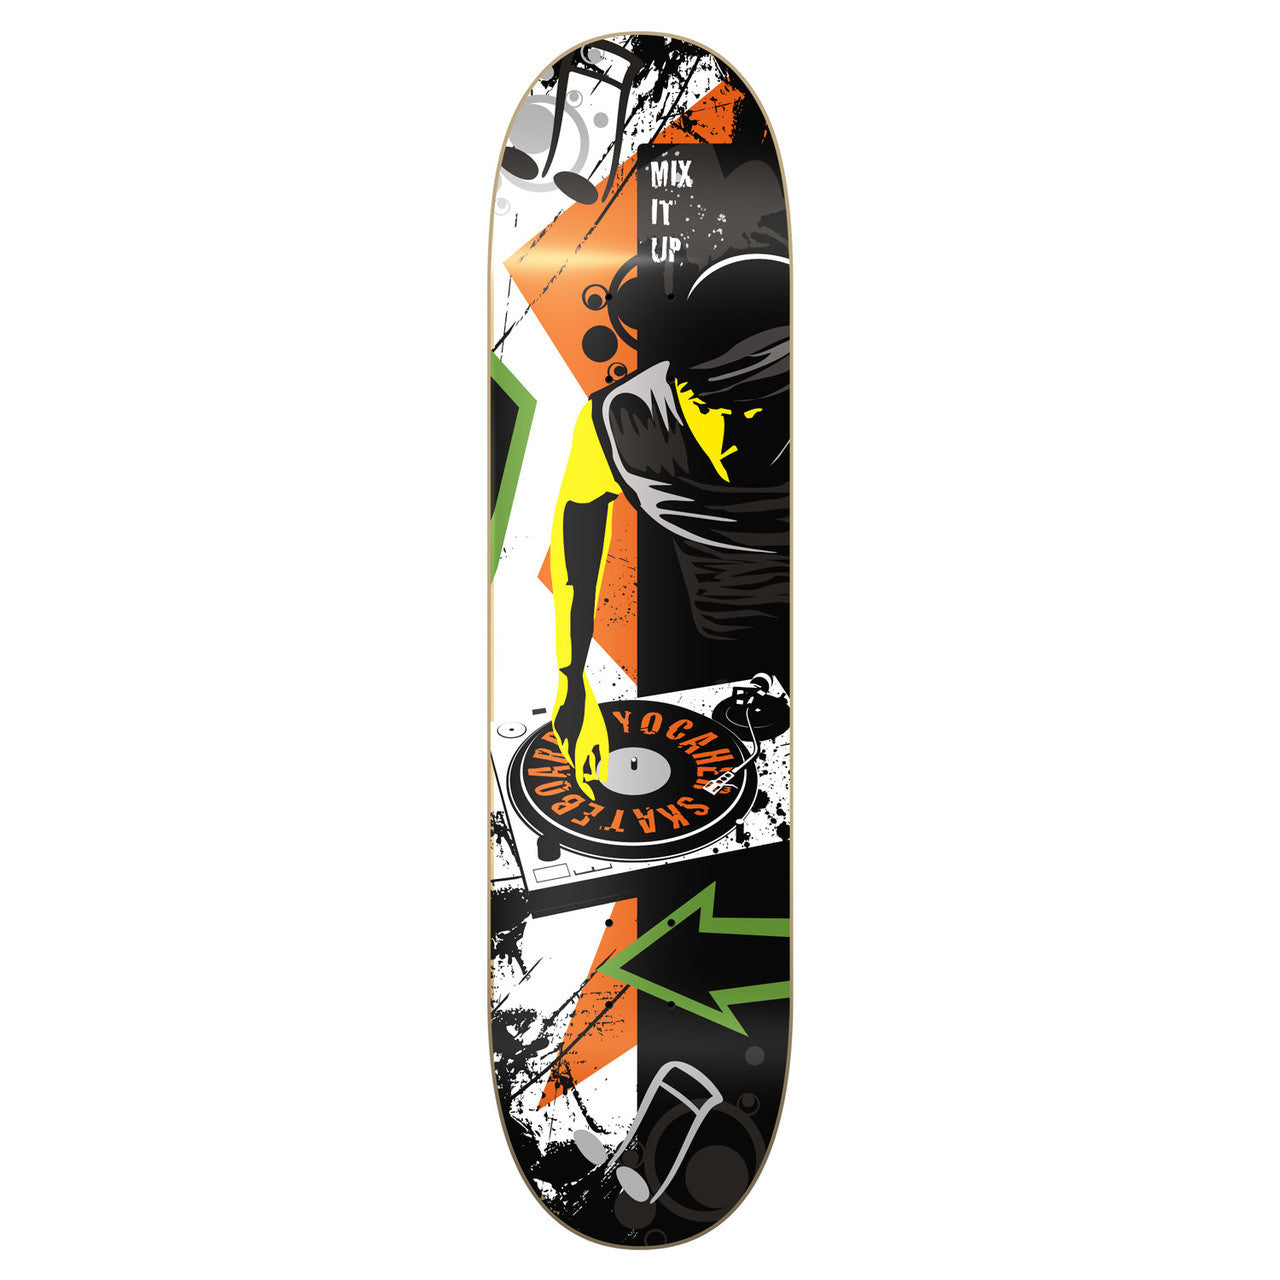 Graphic Mixitup Skateboard Deck